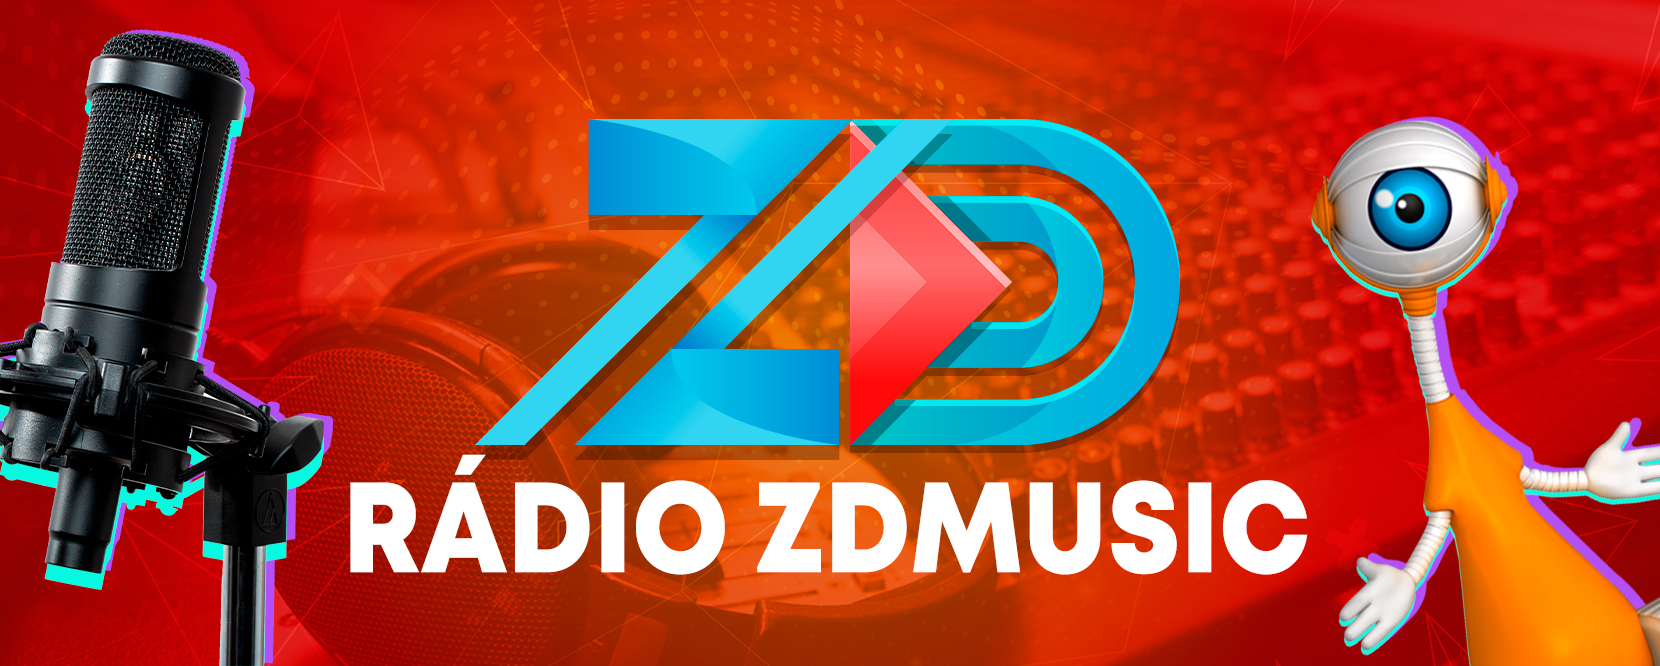 Radio ZD Music FM